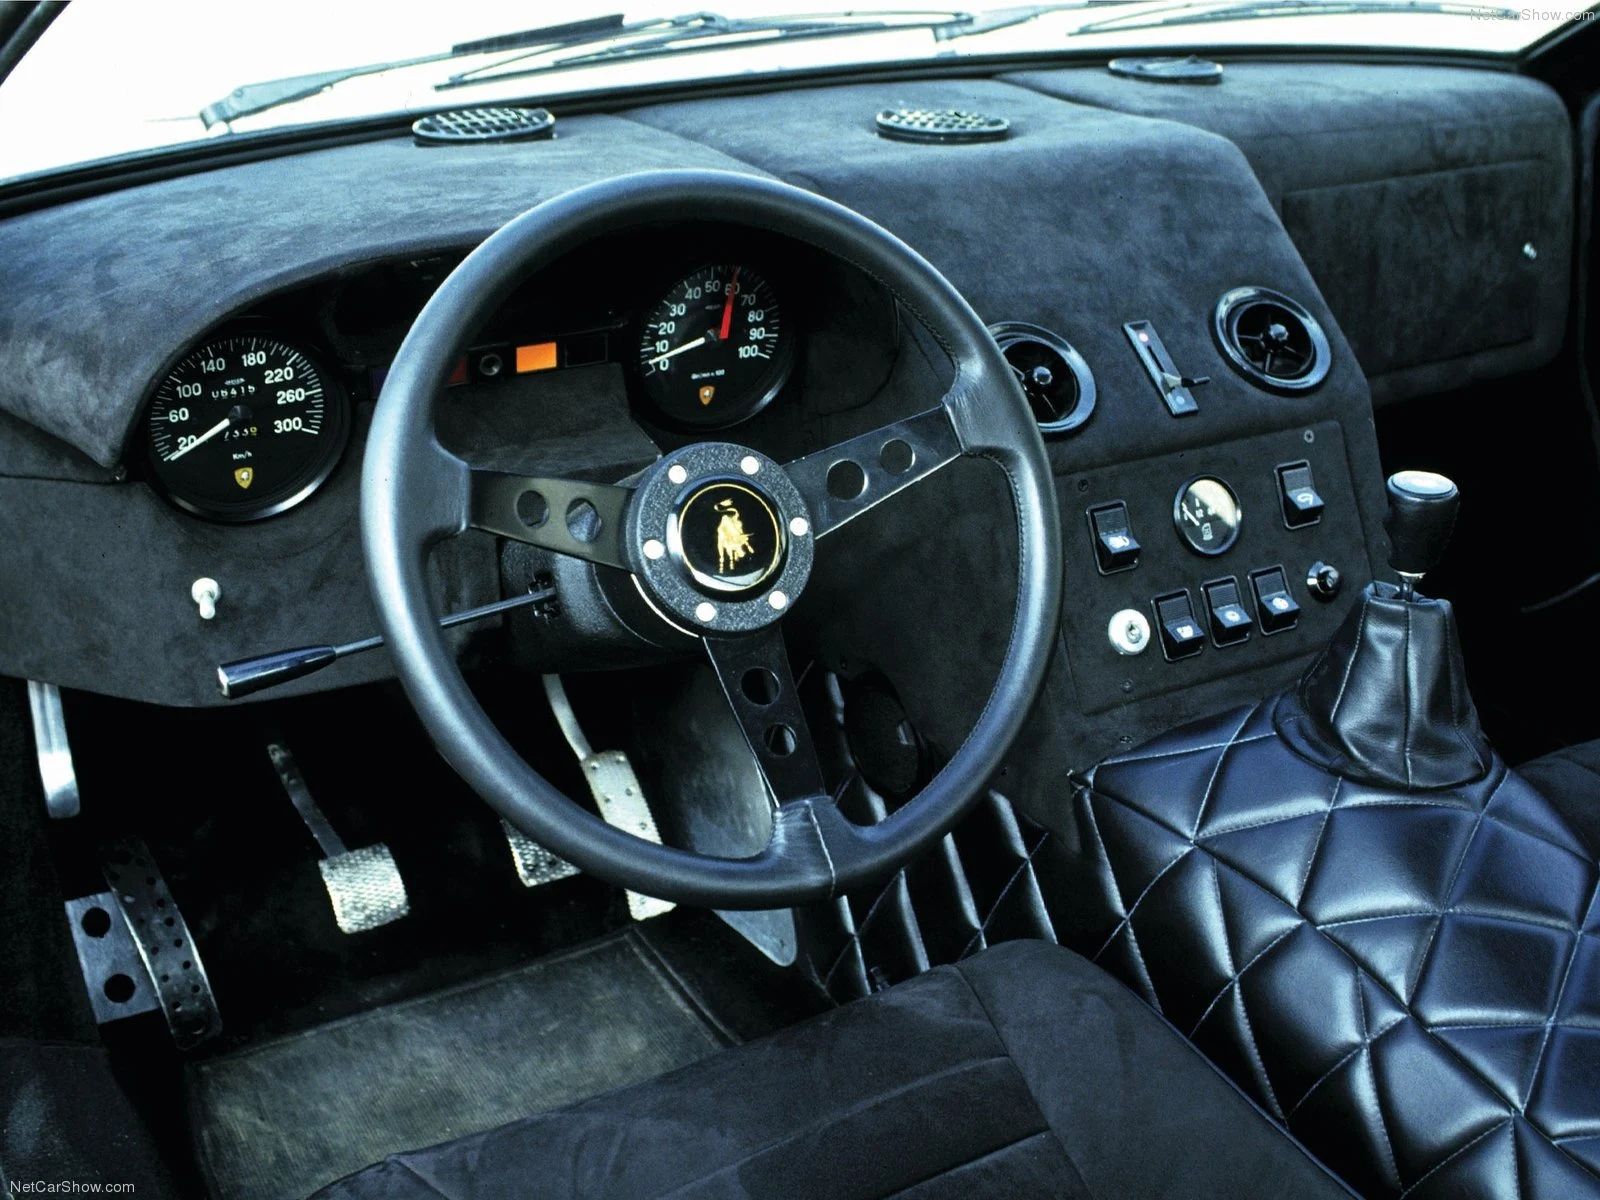 Hình ảnh siêu xe Lamborghini 400 GT 1966 & nội ngoại thất